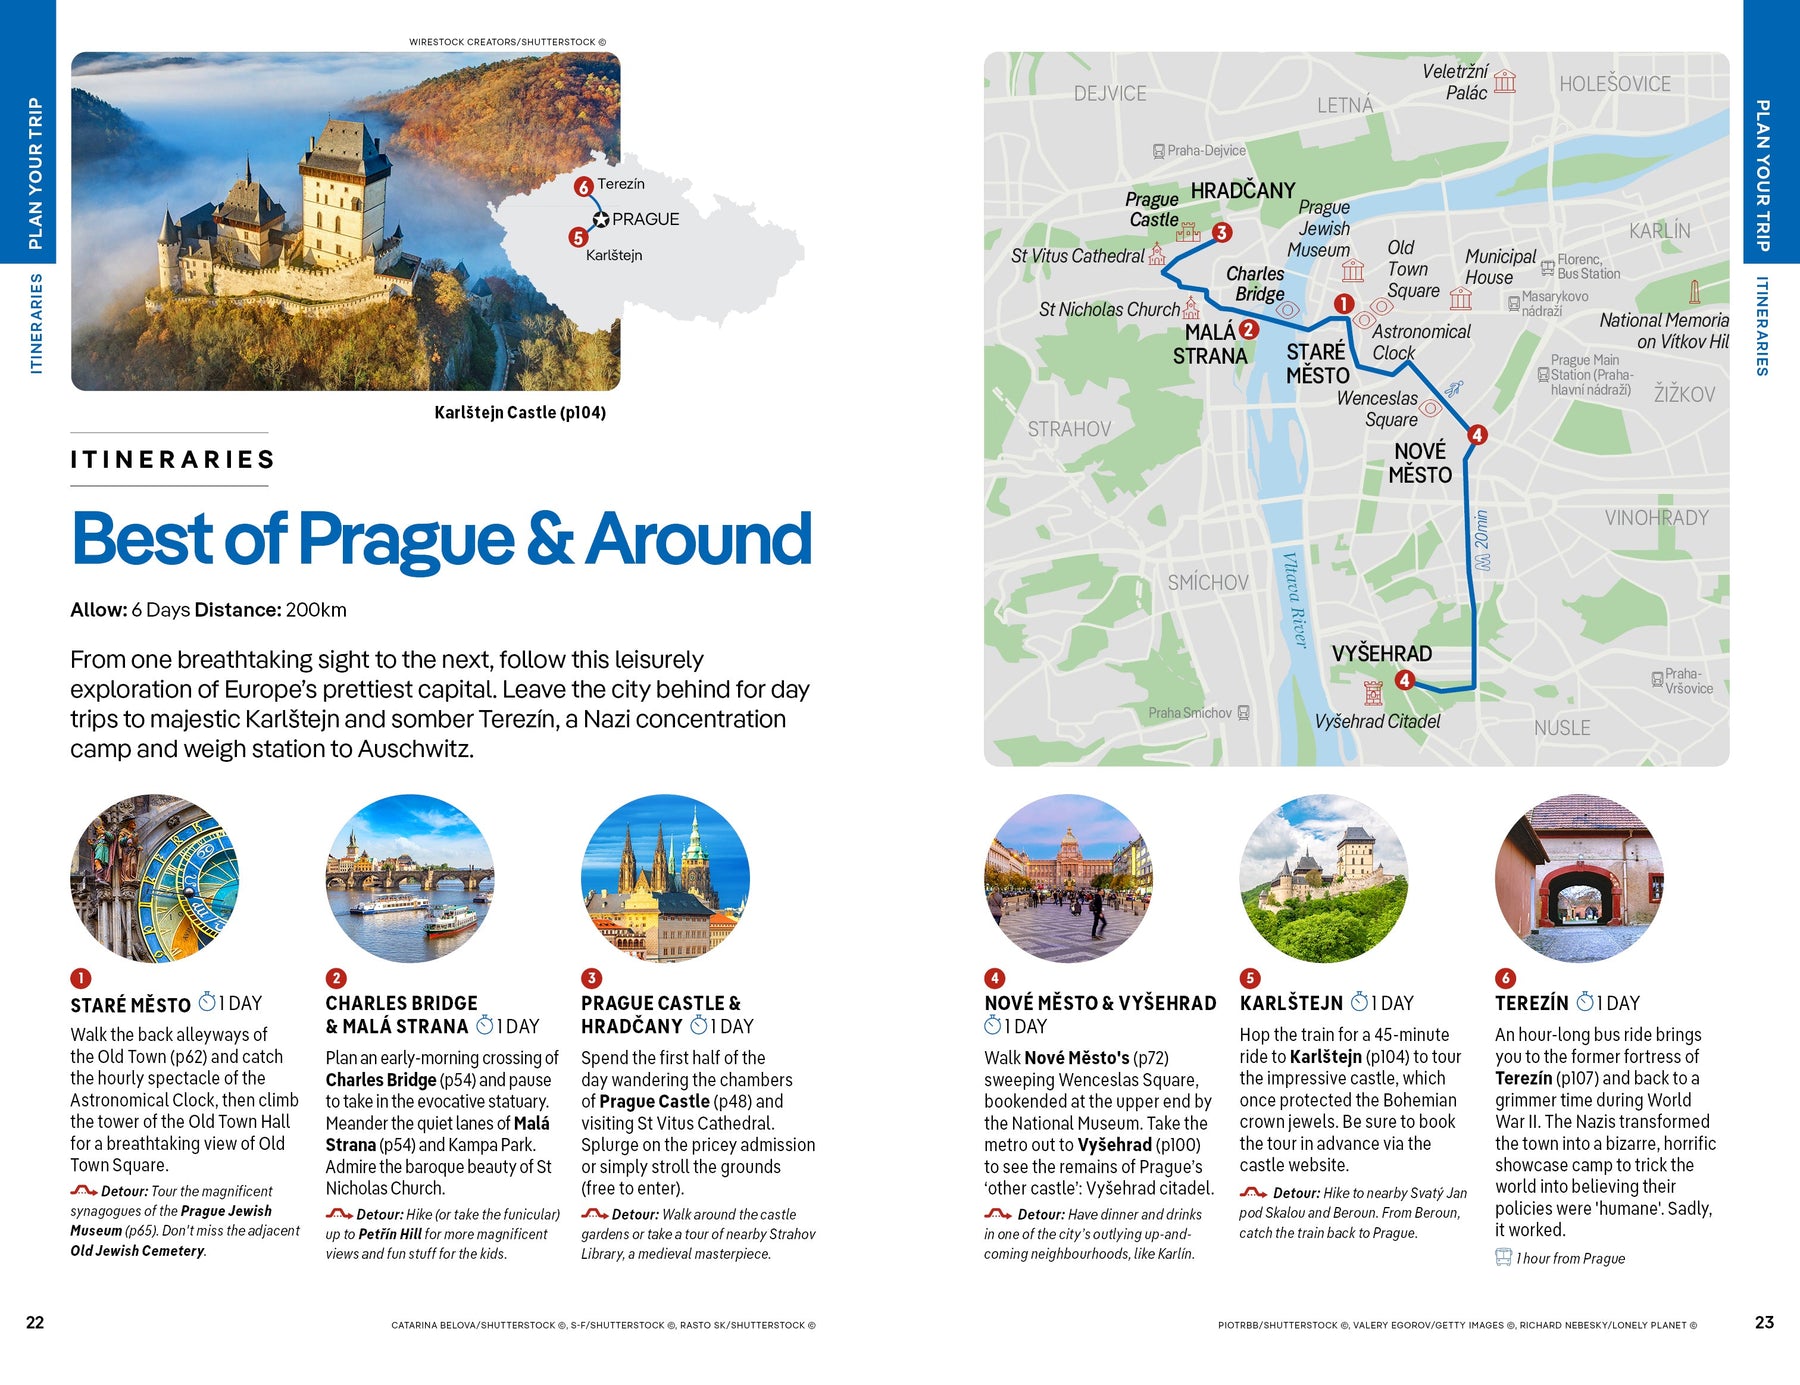 Prague & Czechia preview